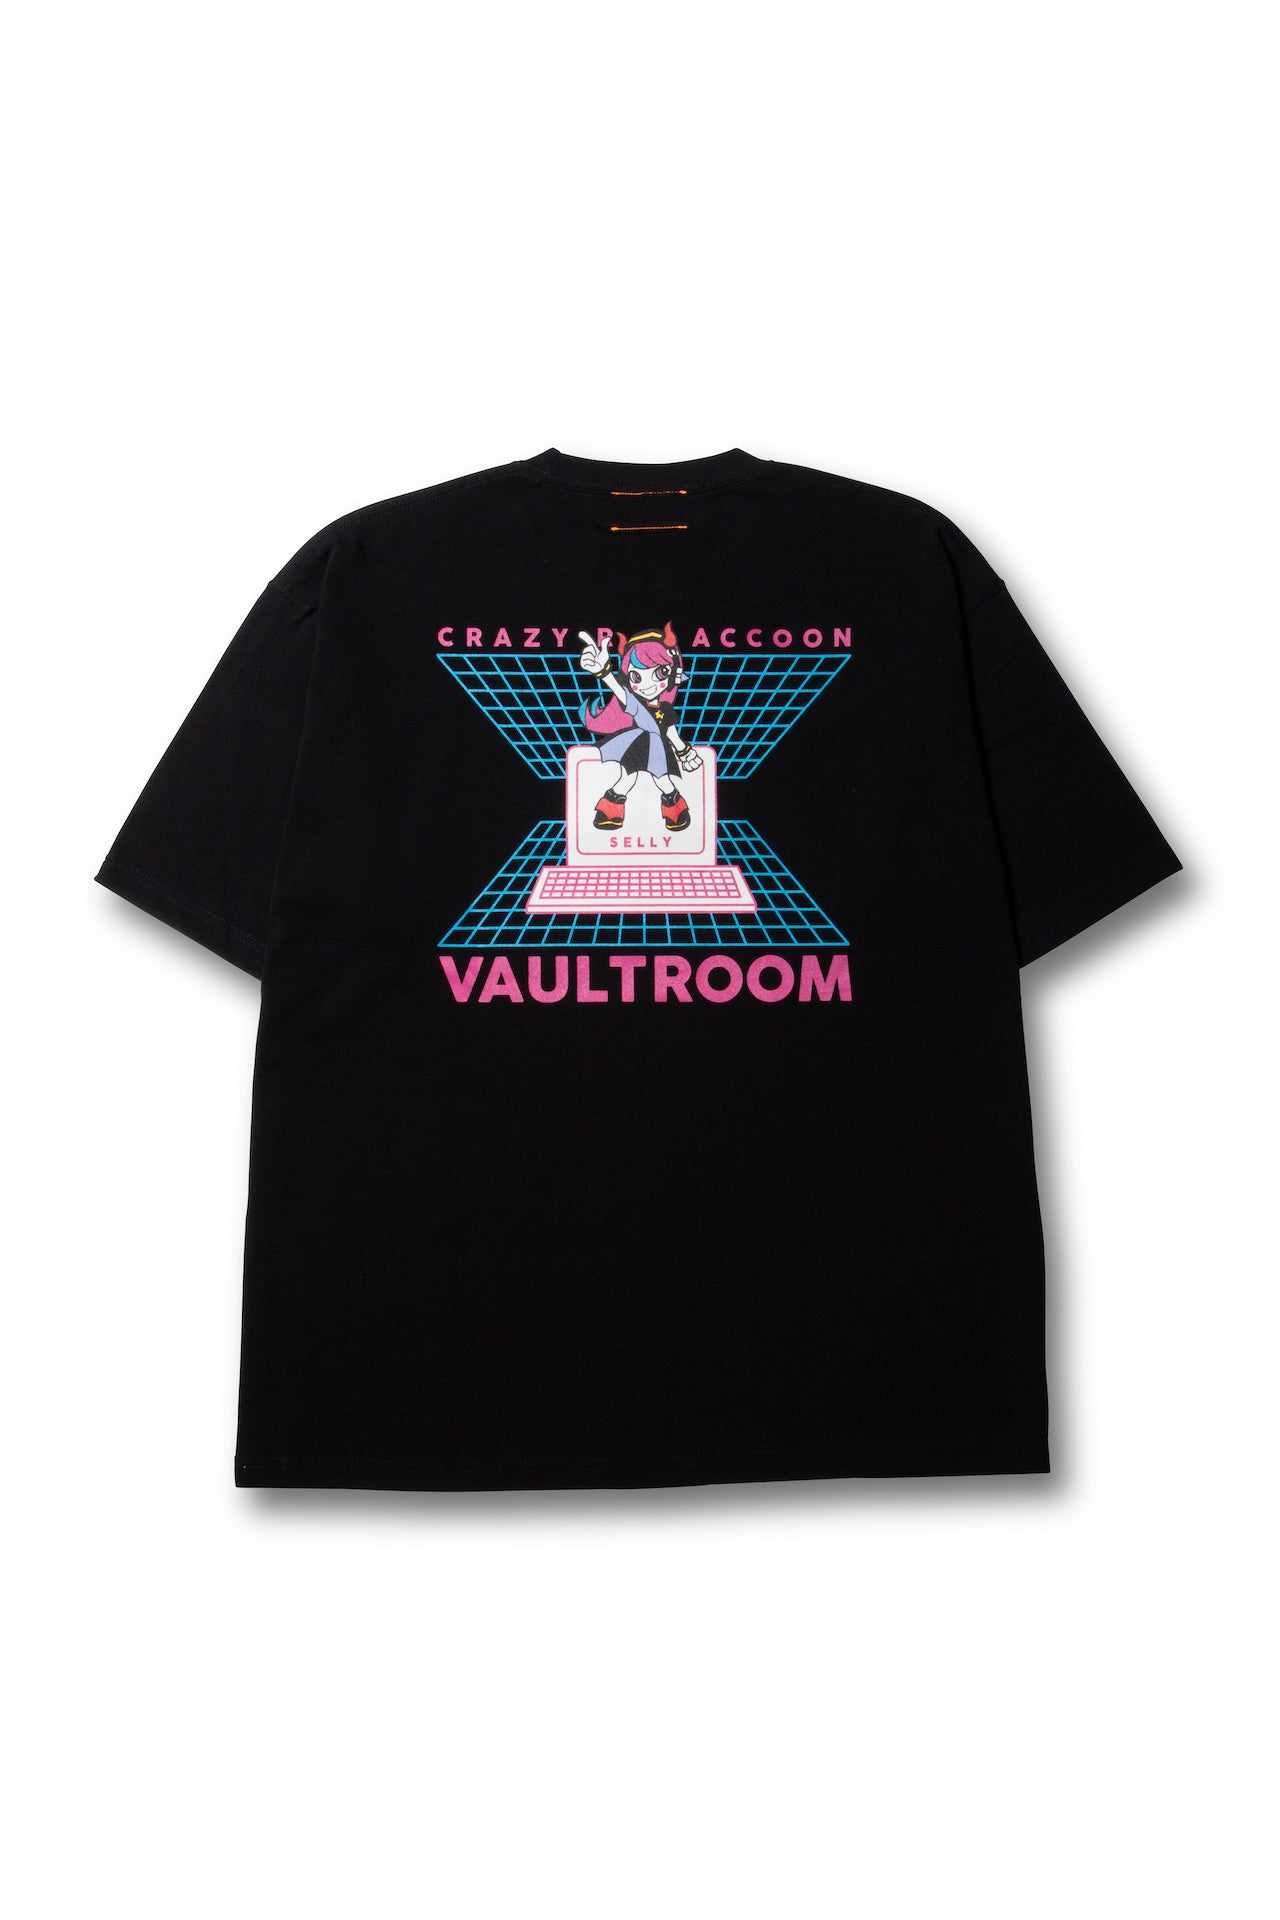 vaultroom CR selly パーカー XL - パーカー